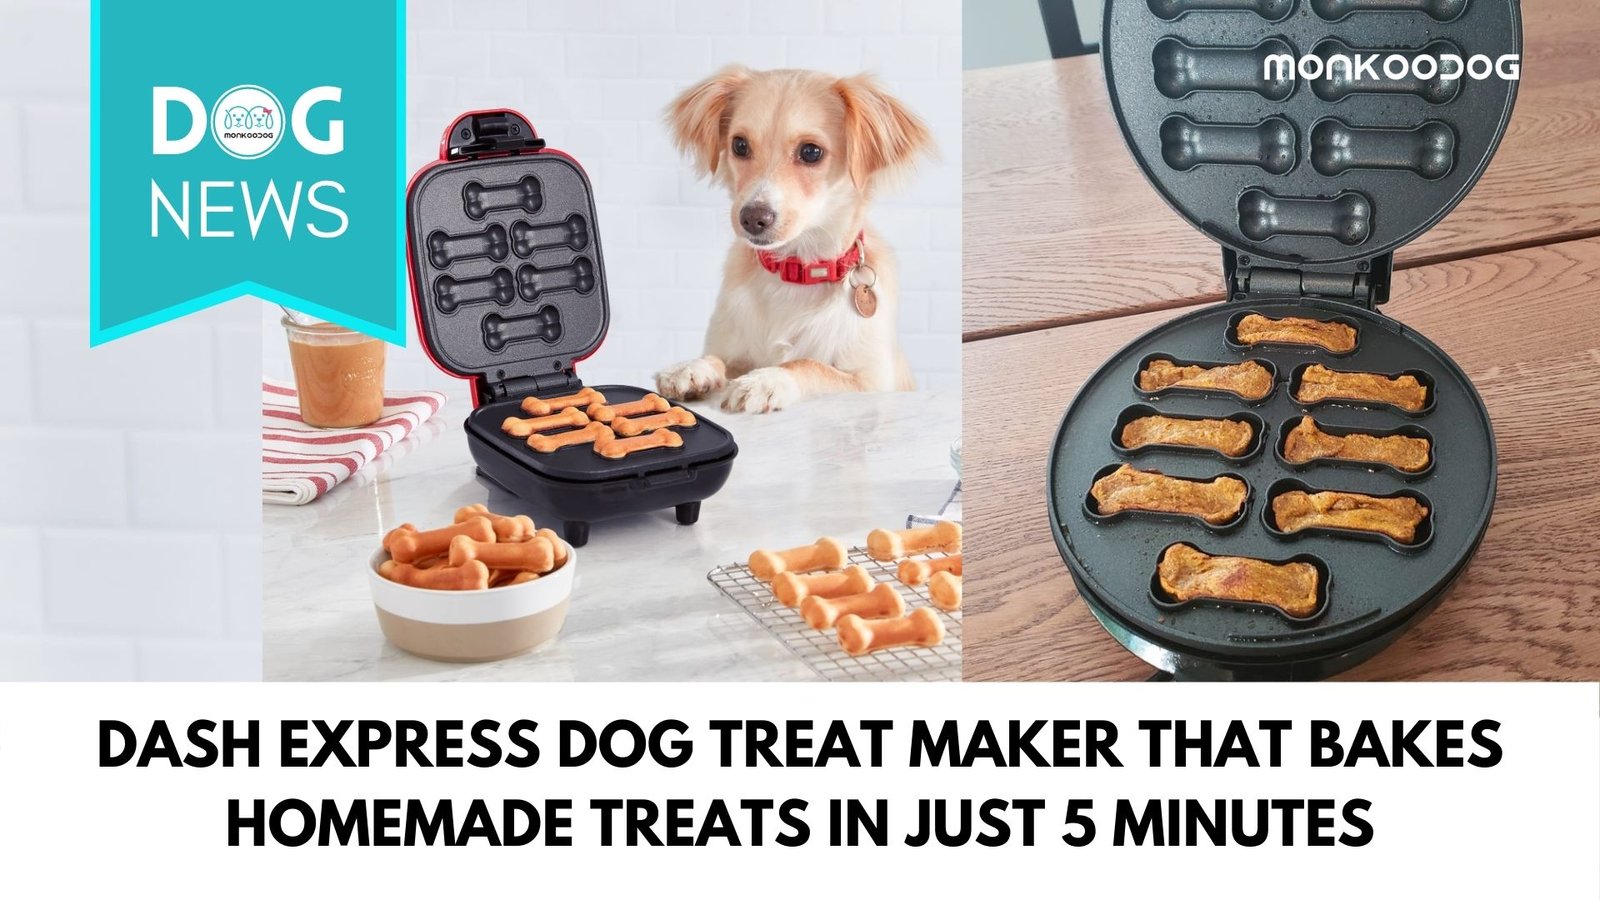 https://www.monkoodog.com/wp-content/uploads/2020/11/Dash-Express-Dog-Treat-Maker-that-bakes-homemade-treats-in-just-5-minutesDash-Express-Dog-Treat-Maker-that-bakes-homemade-treats-in-just-5-minutes.jpg